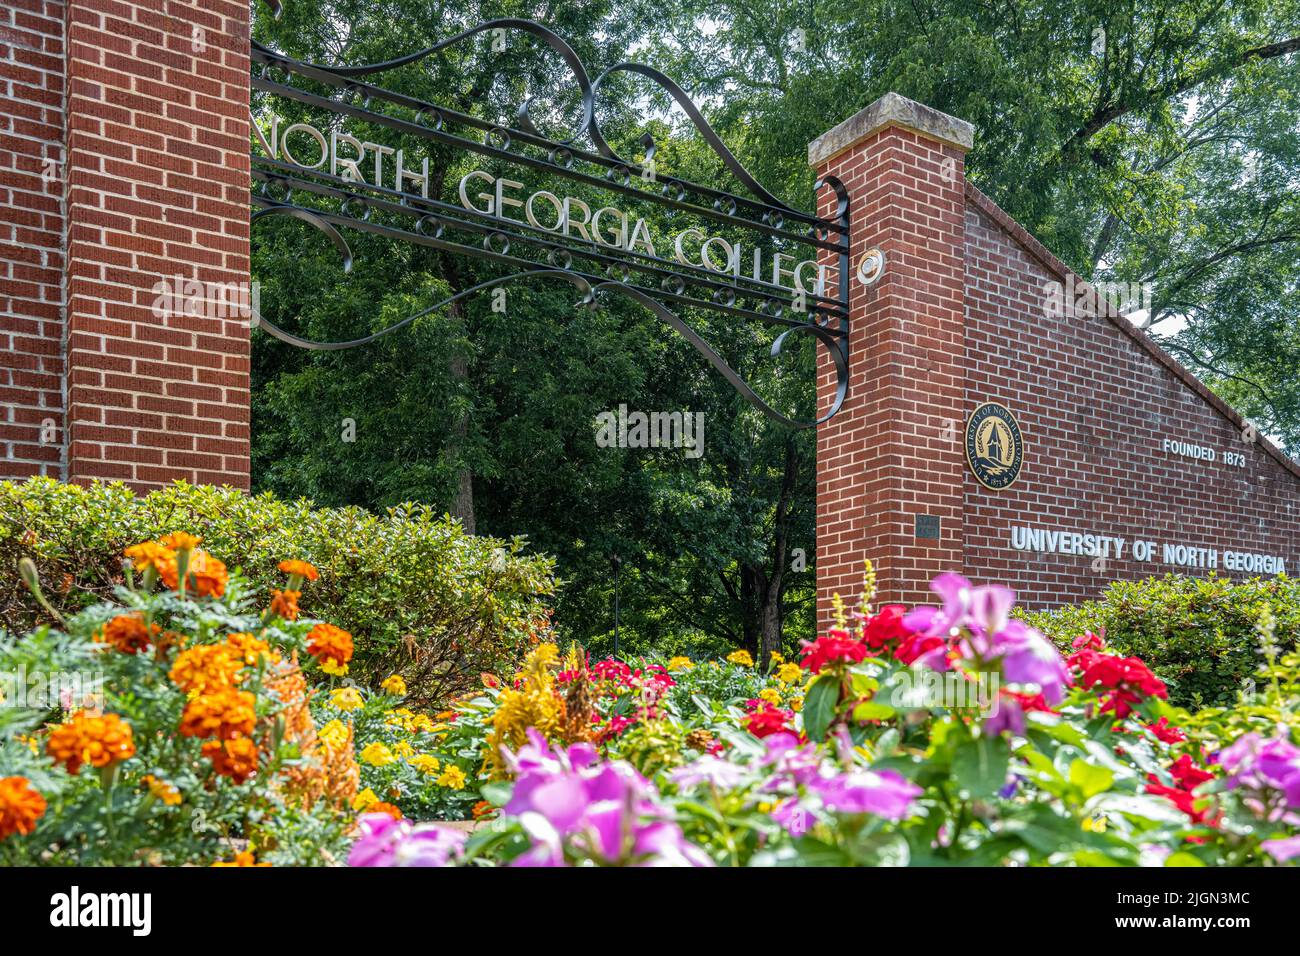 North Georgia College gate at the University of North Georgia in Dahlonega, Georgia. (USA) Stock Photo